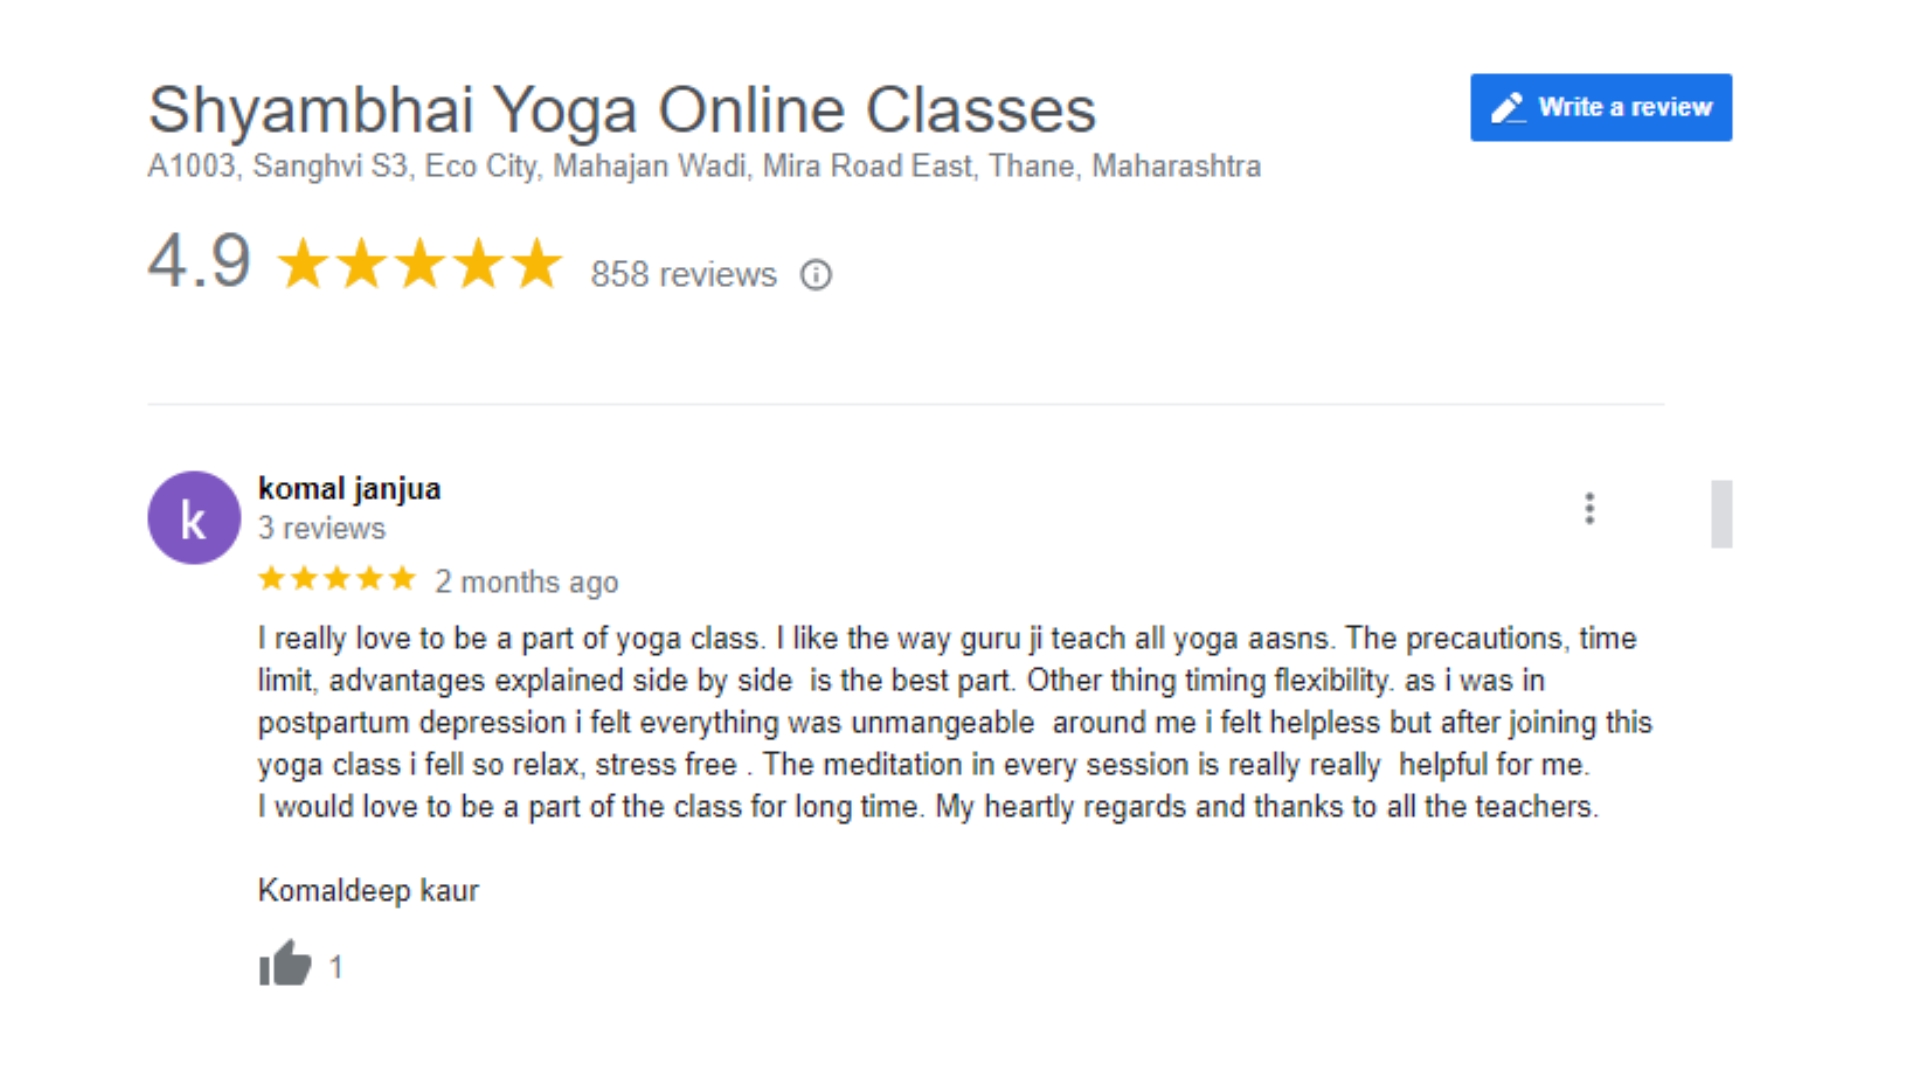 One to one yoga classes Google Review Screenshot - Komal